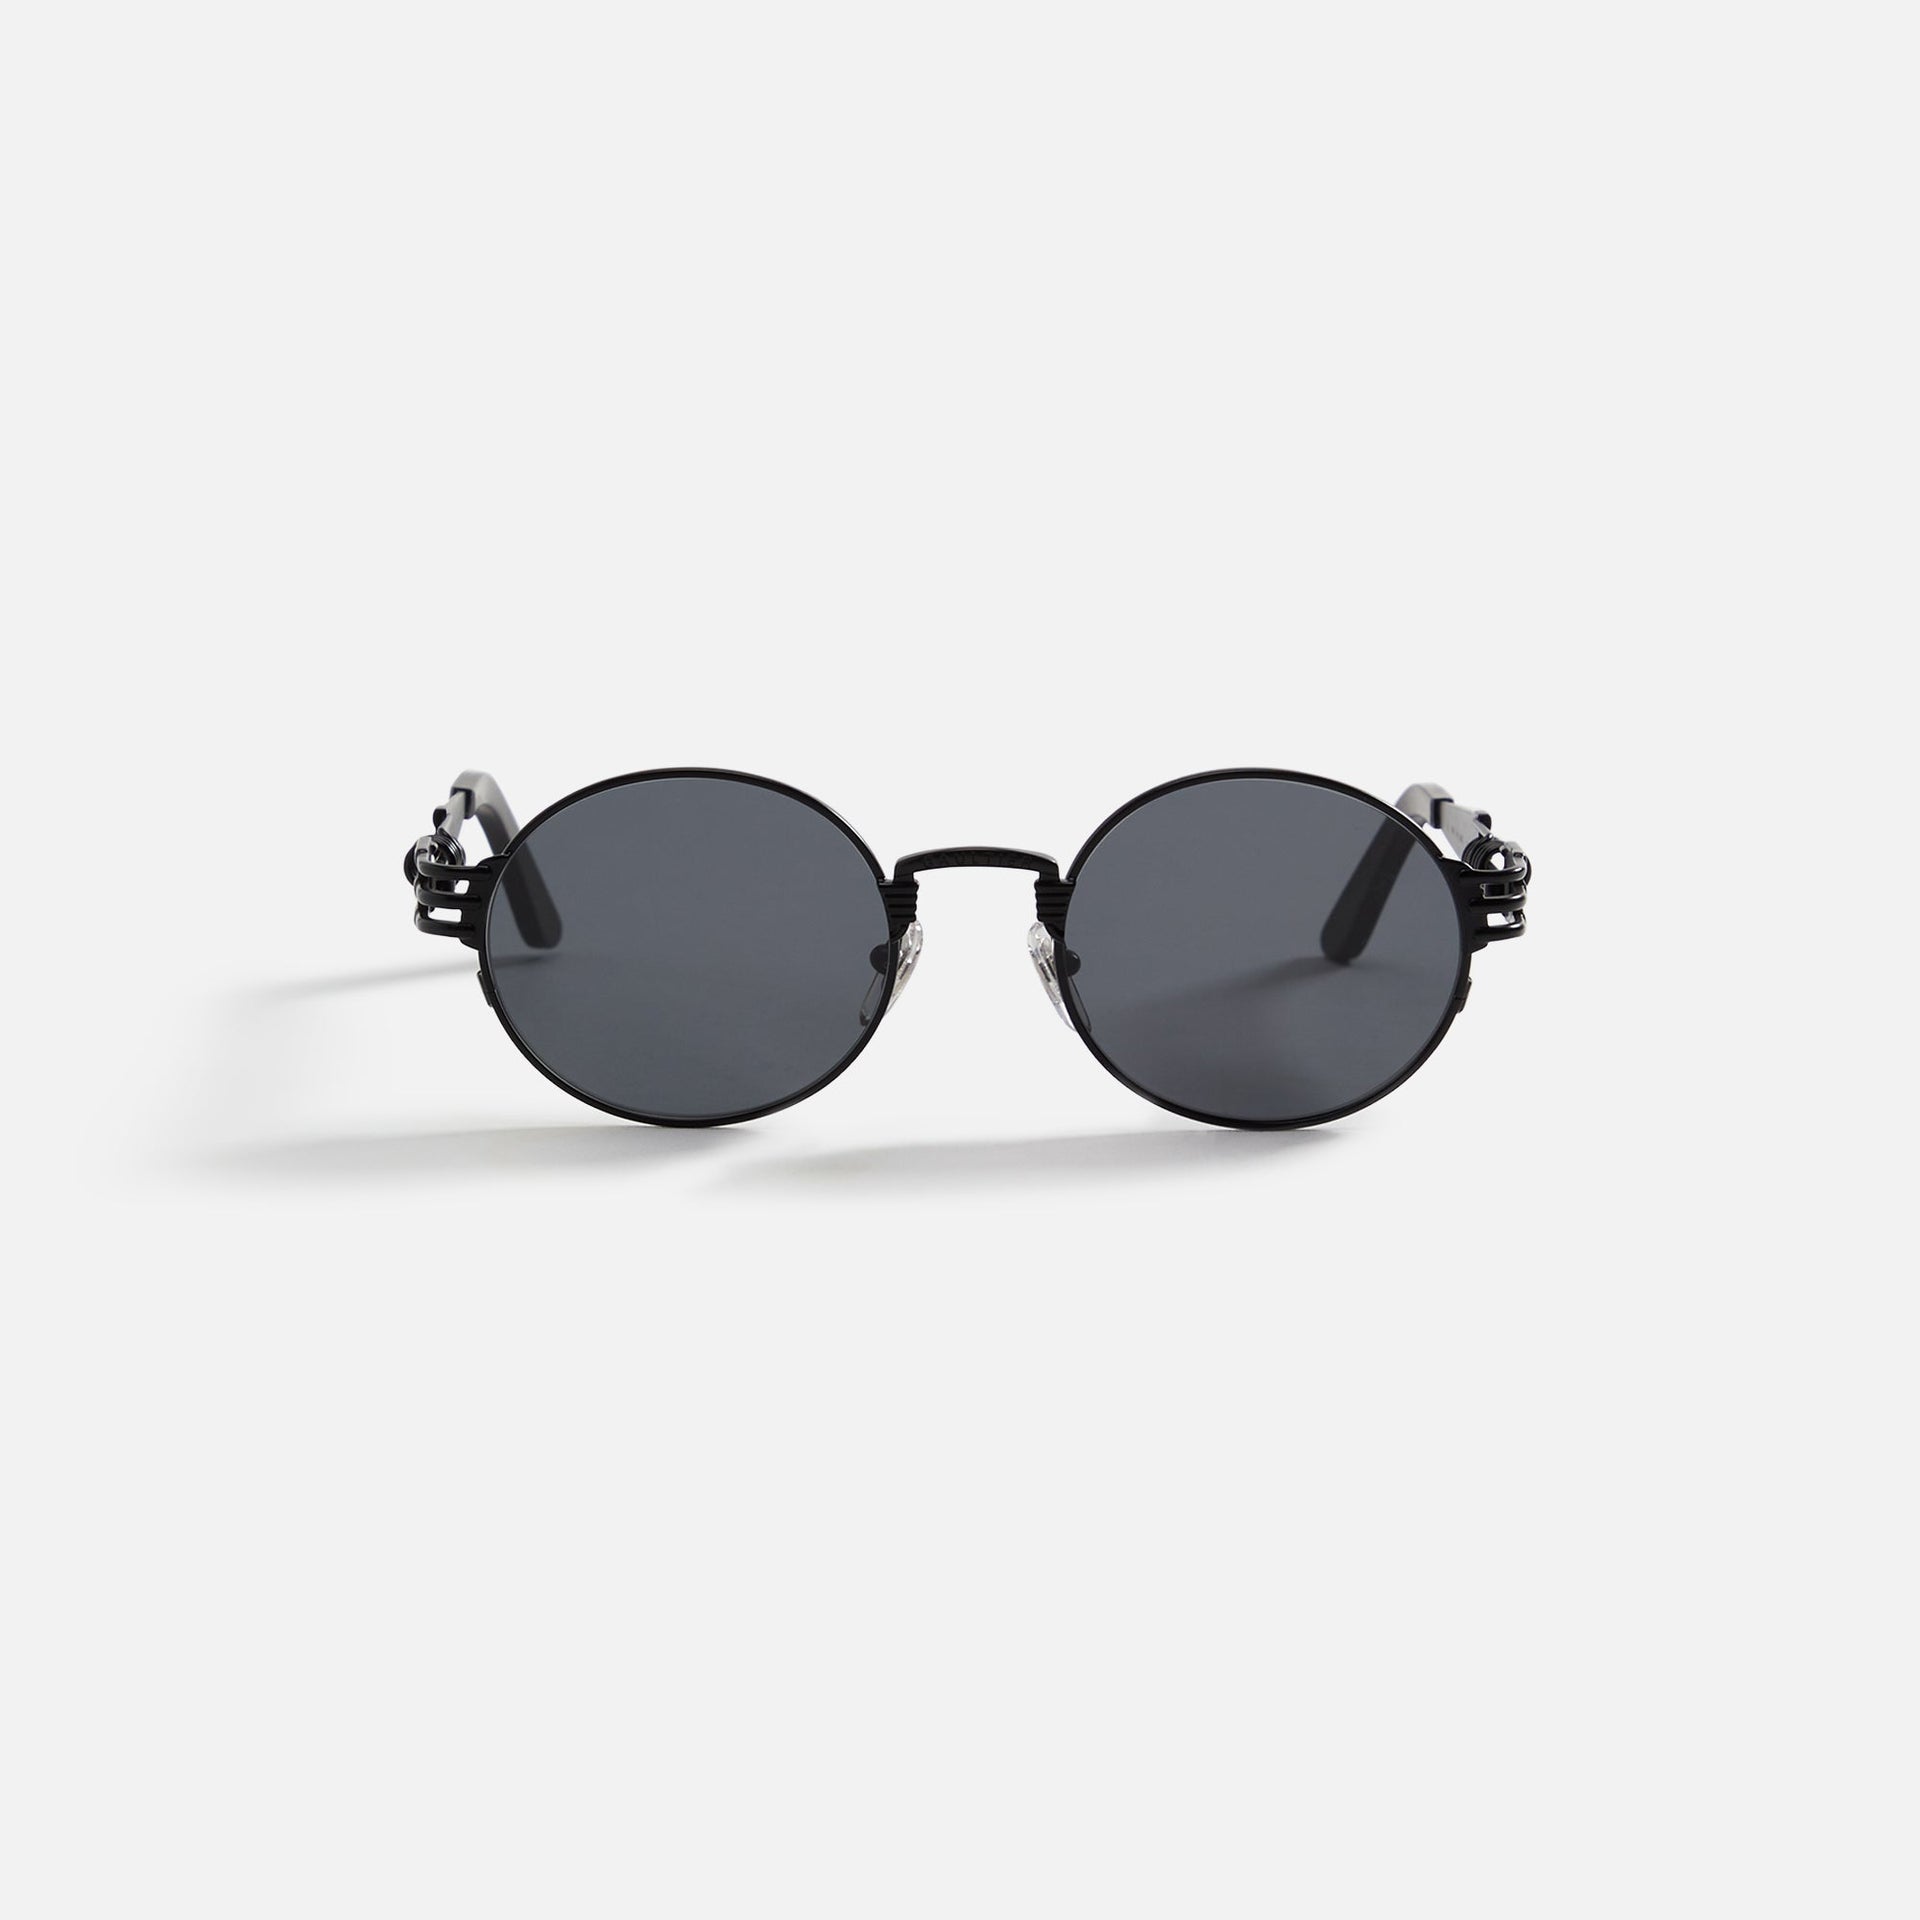 Jean Paul Gaultier JPG Sunglasses - Black